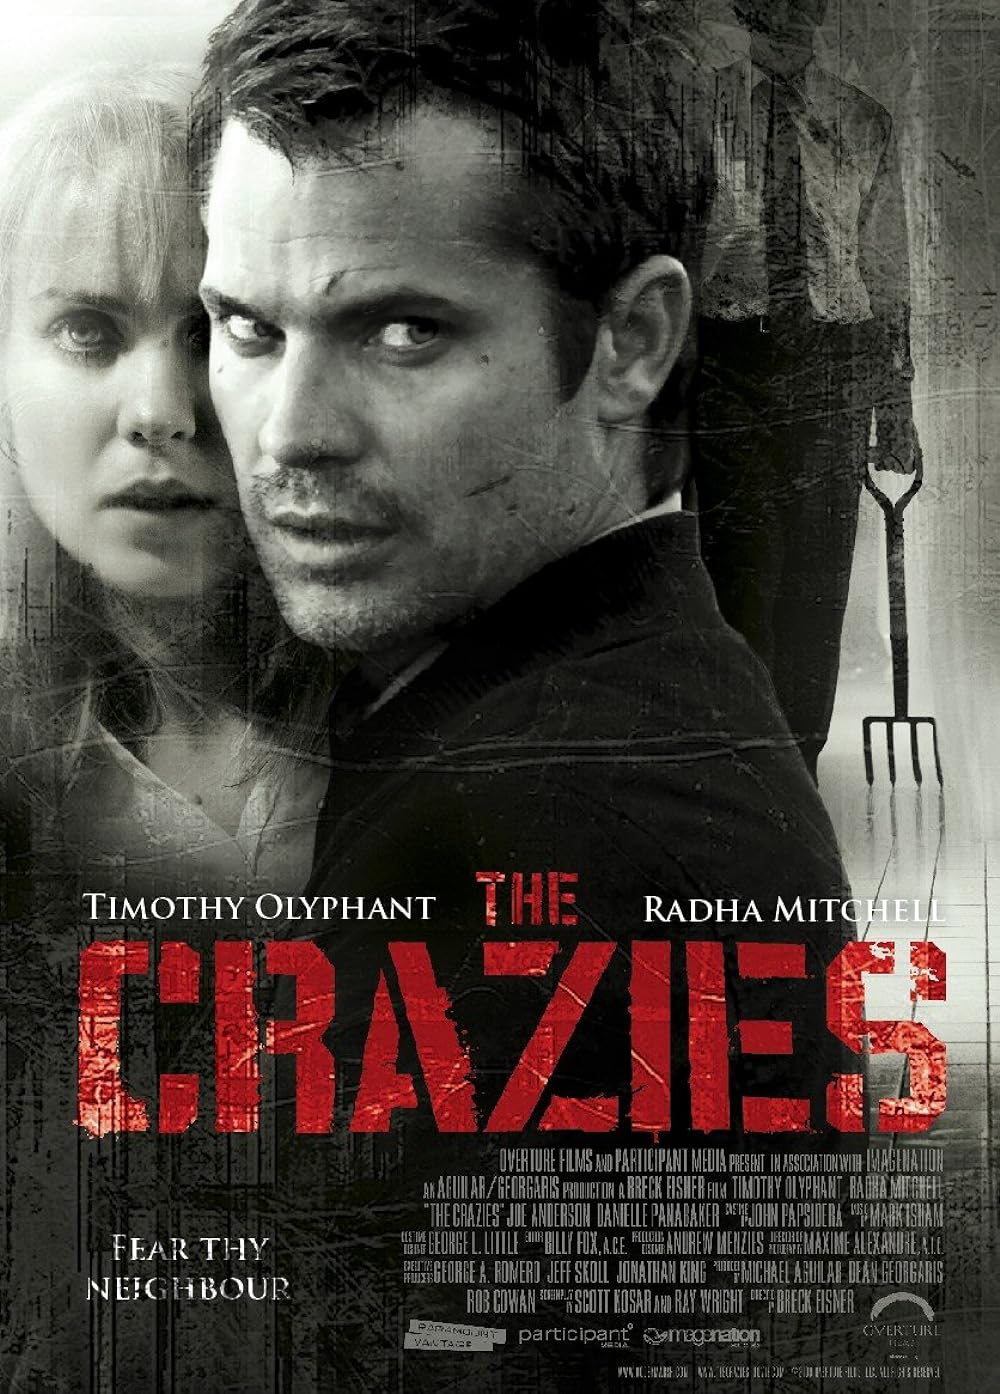 The Crazies (2010) 2114Kbps 23.976Fps 48Khz BluRay DTS-HD MA 5.1Ch Turkish Audio TAC